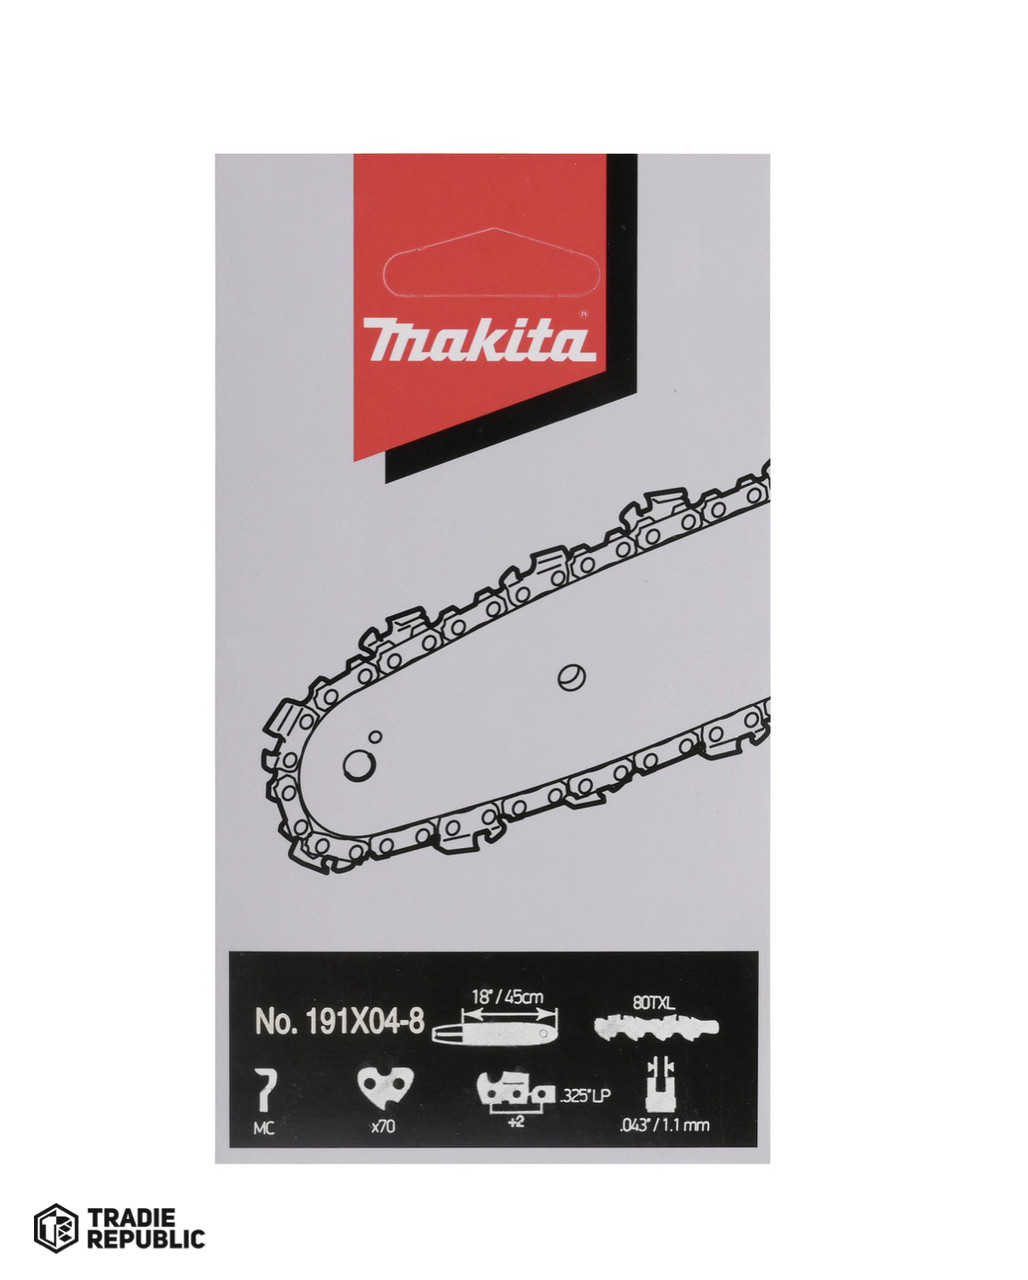 191X04-8 Makita 80TXL Saw chain (450mm) UC013G